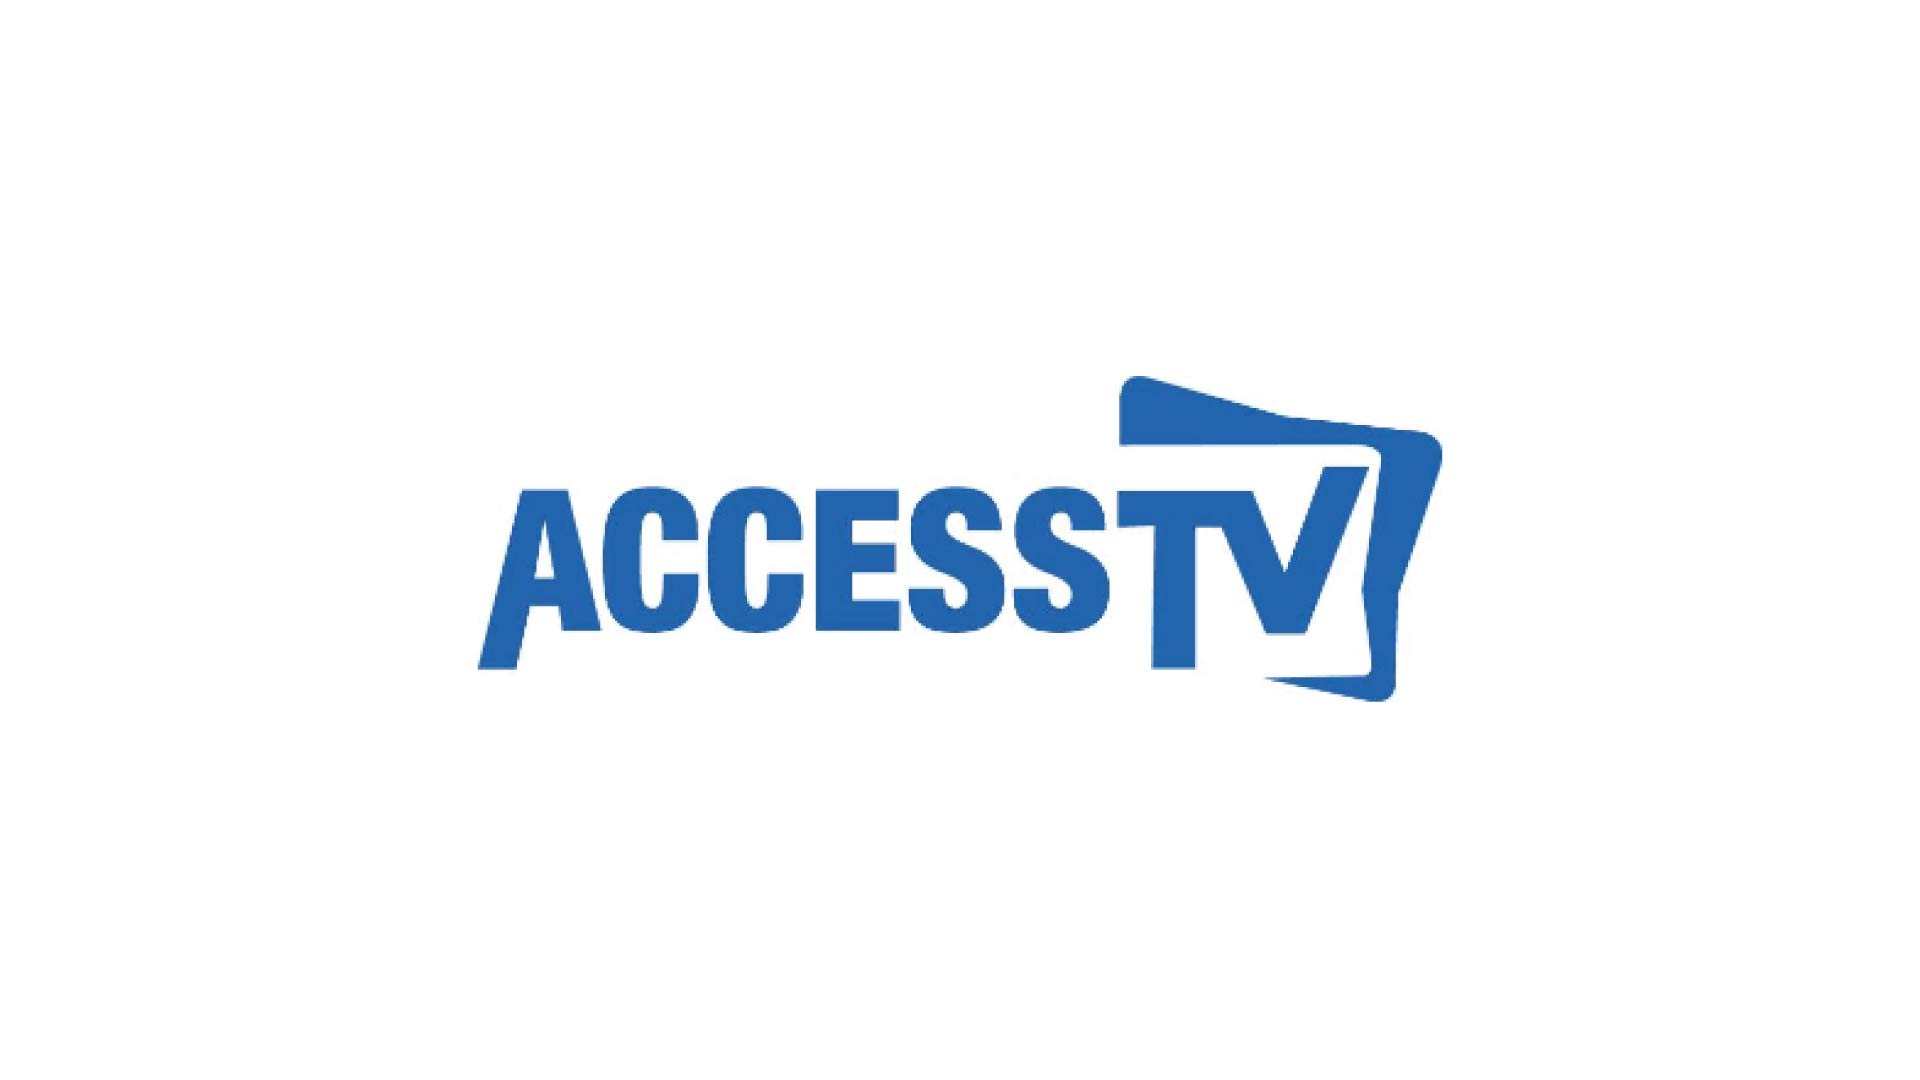 Access TV